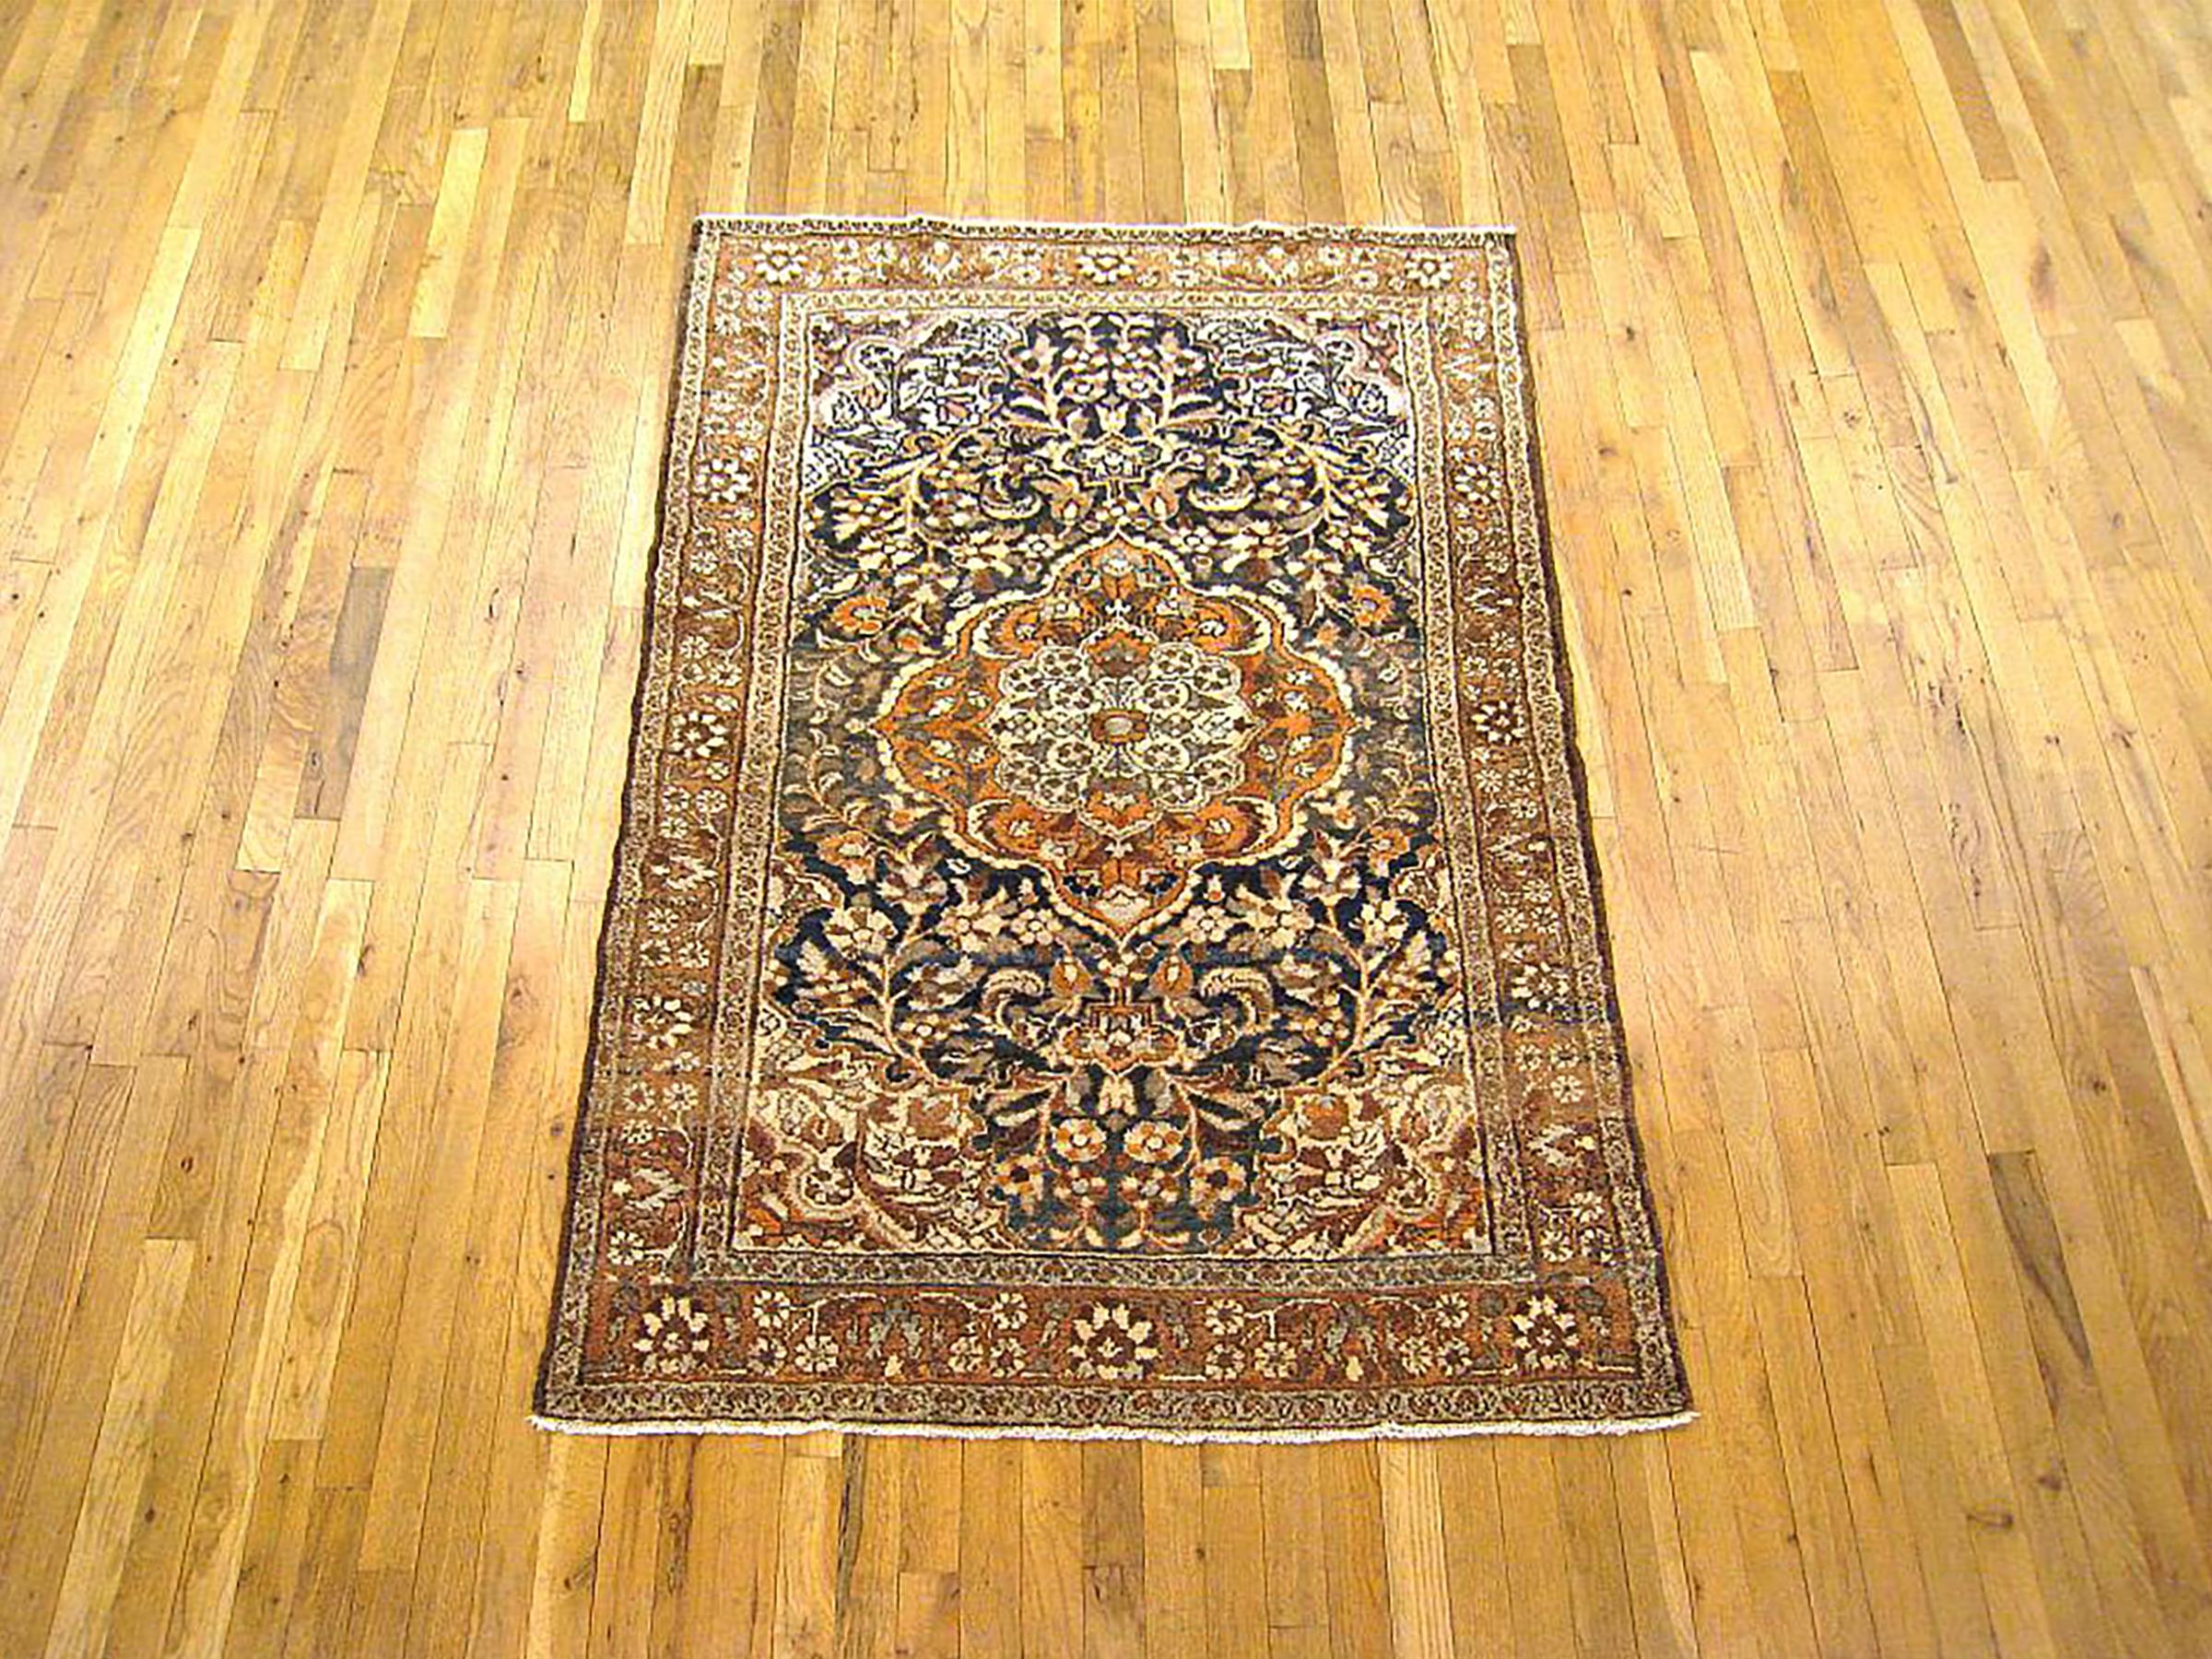 Antique Persian Hamadan Oriental rug, Small size

A vintage Persian Hamadan oriental rug in small size, size 5'7